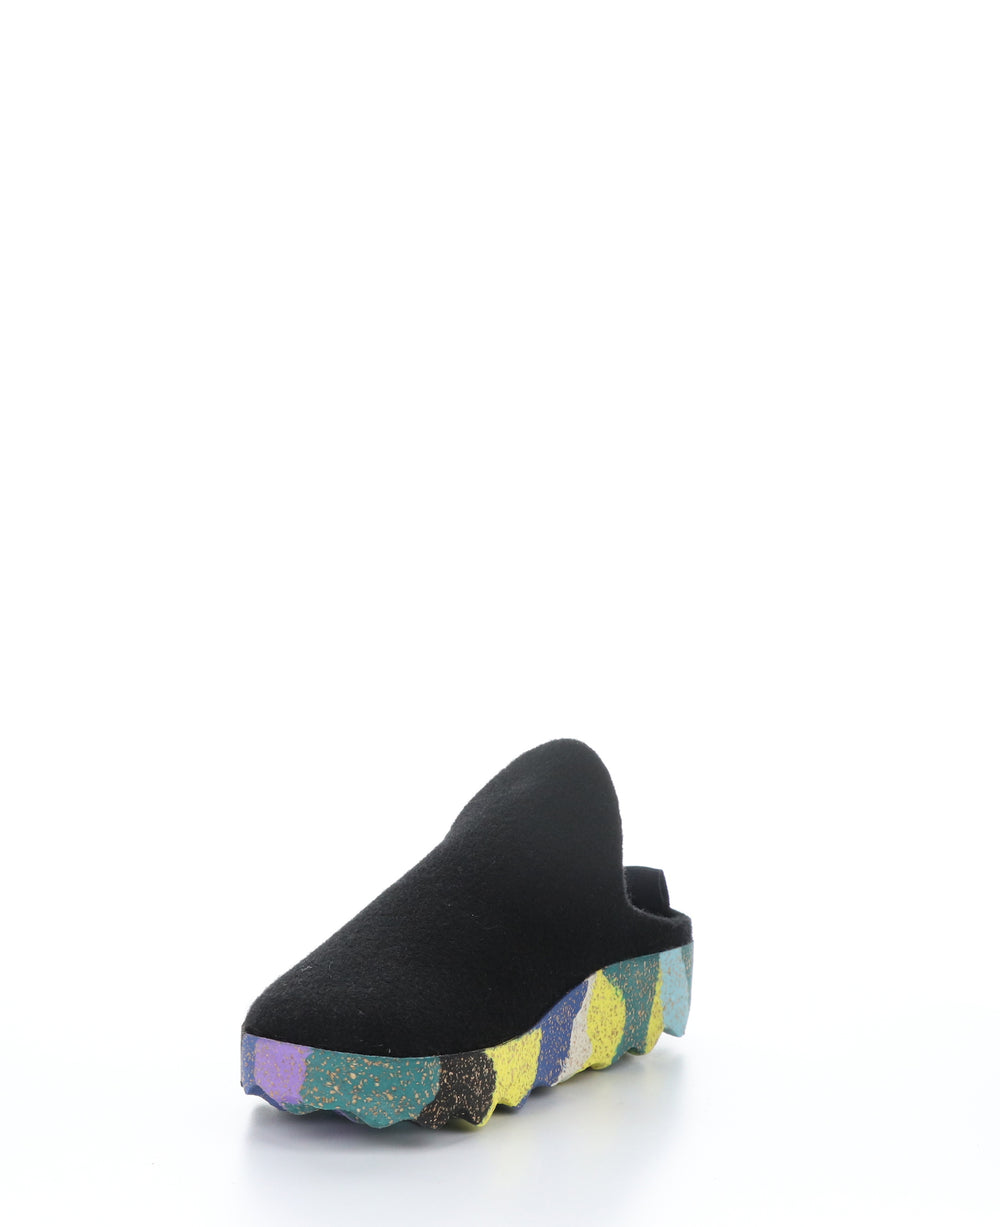 COME023ASP Black/Multi Round Toe Shoes|COME023ASP Chaussures à Bout Rond in Noir